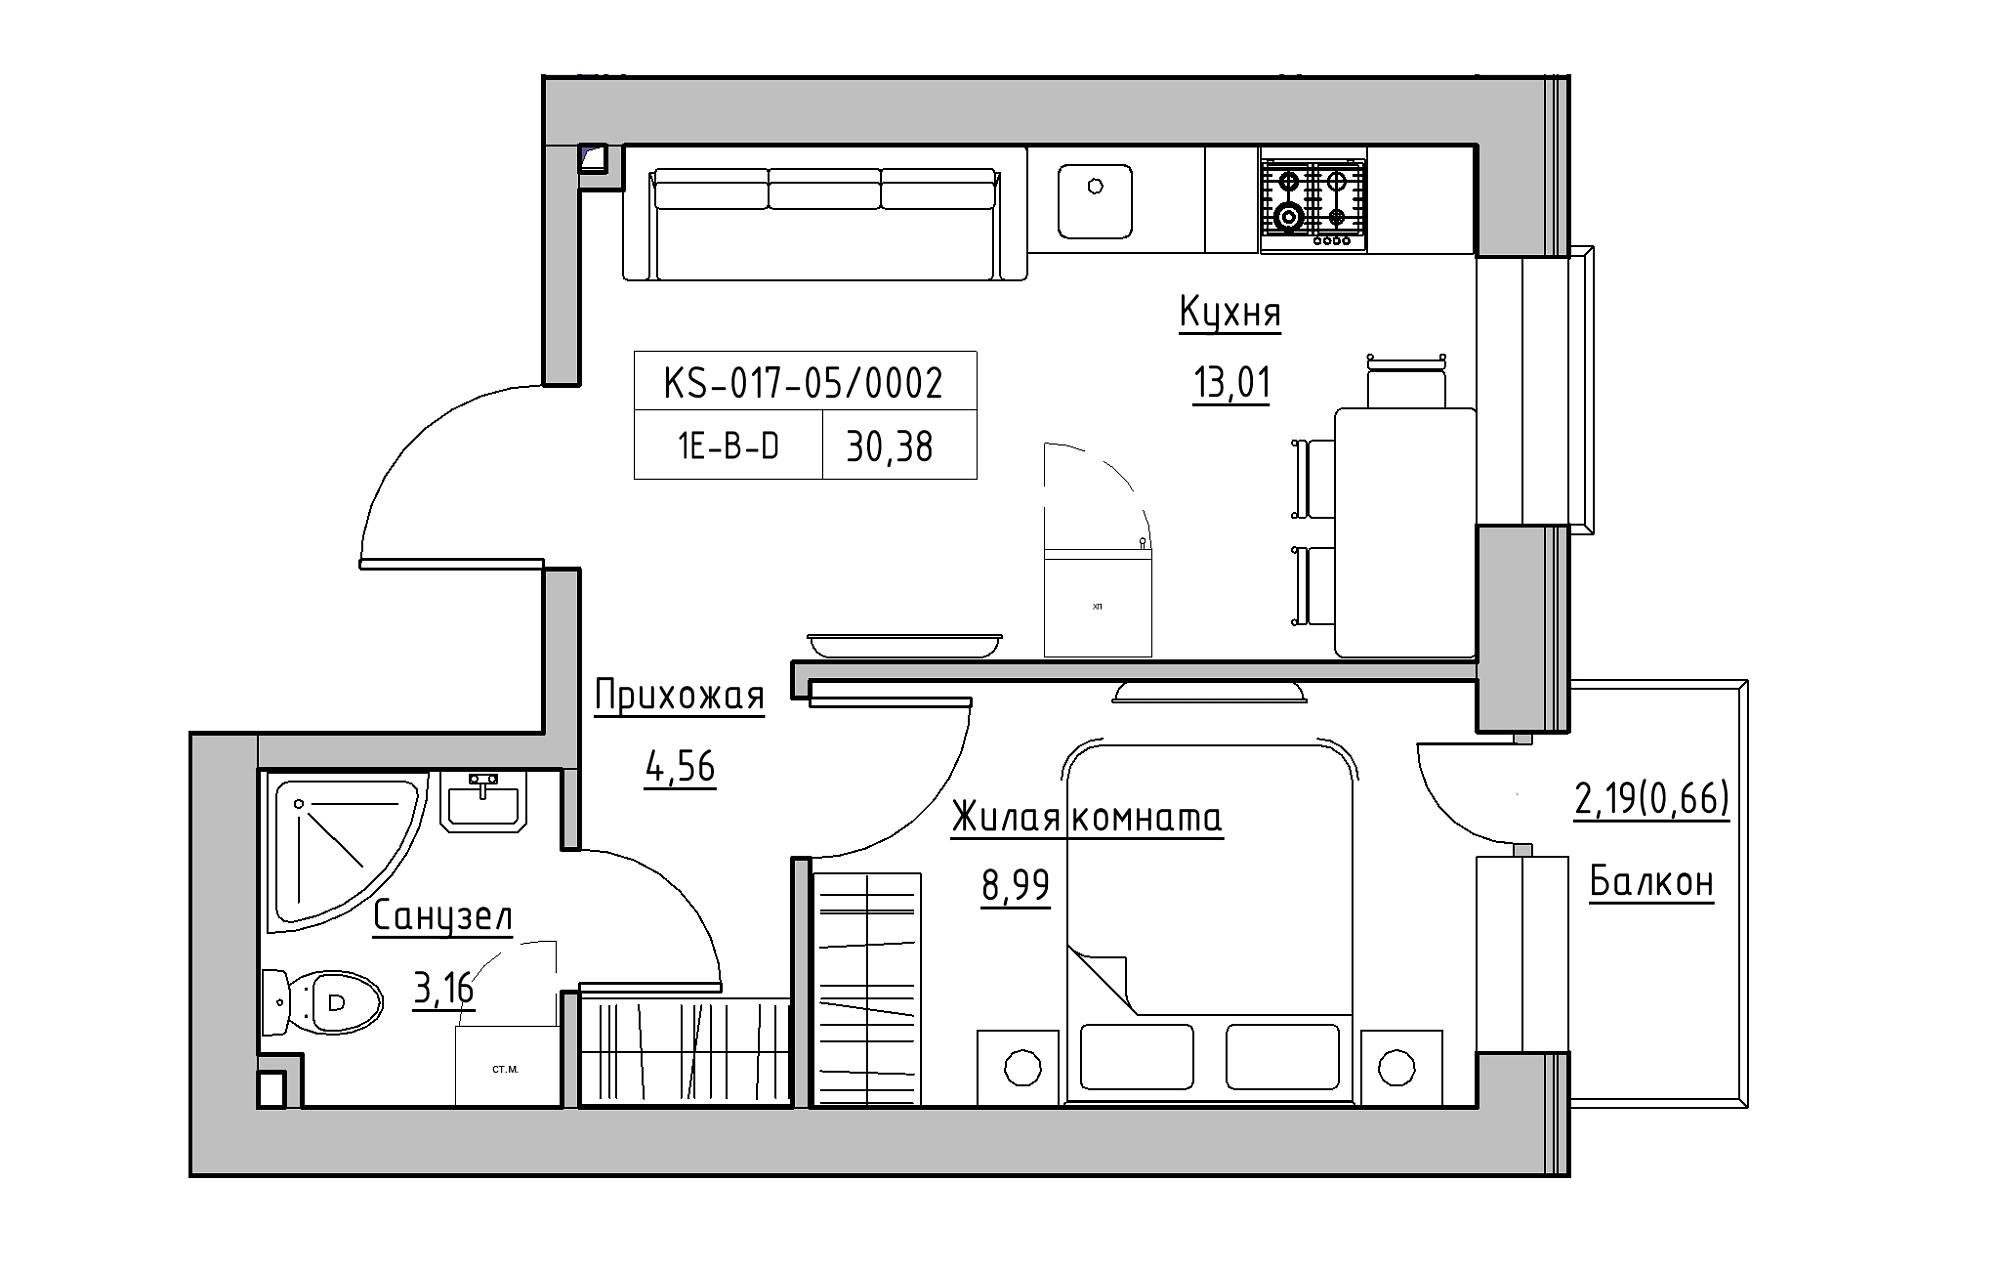 Planning 1-rm flats area 30.38m2, KS-017-05/0002.